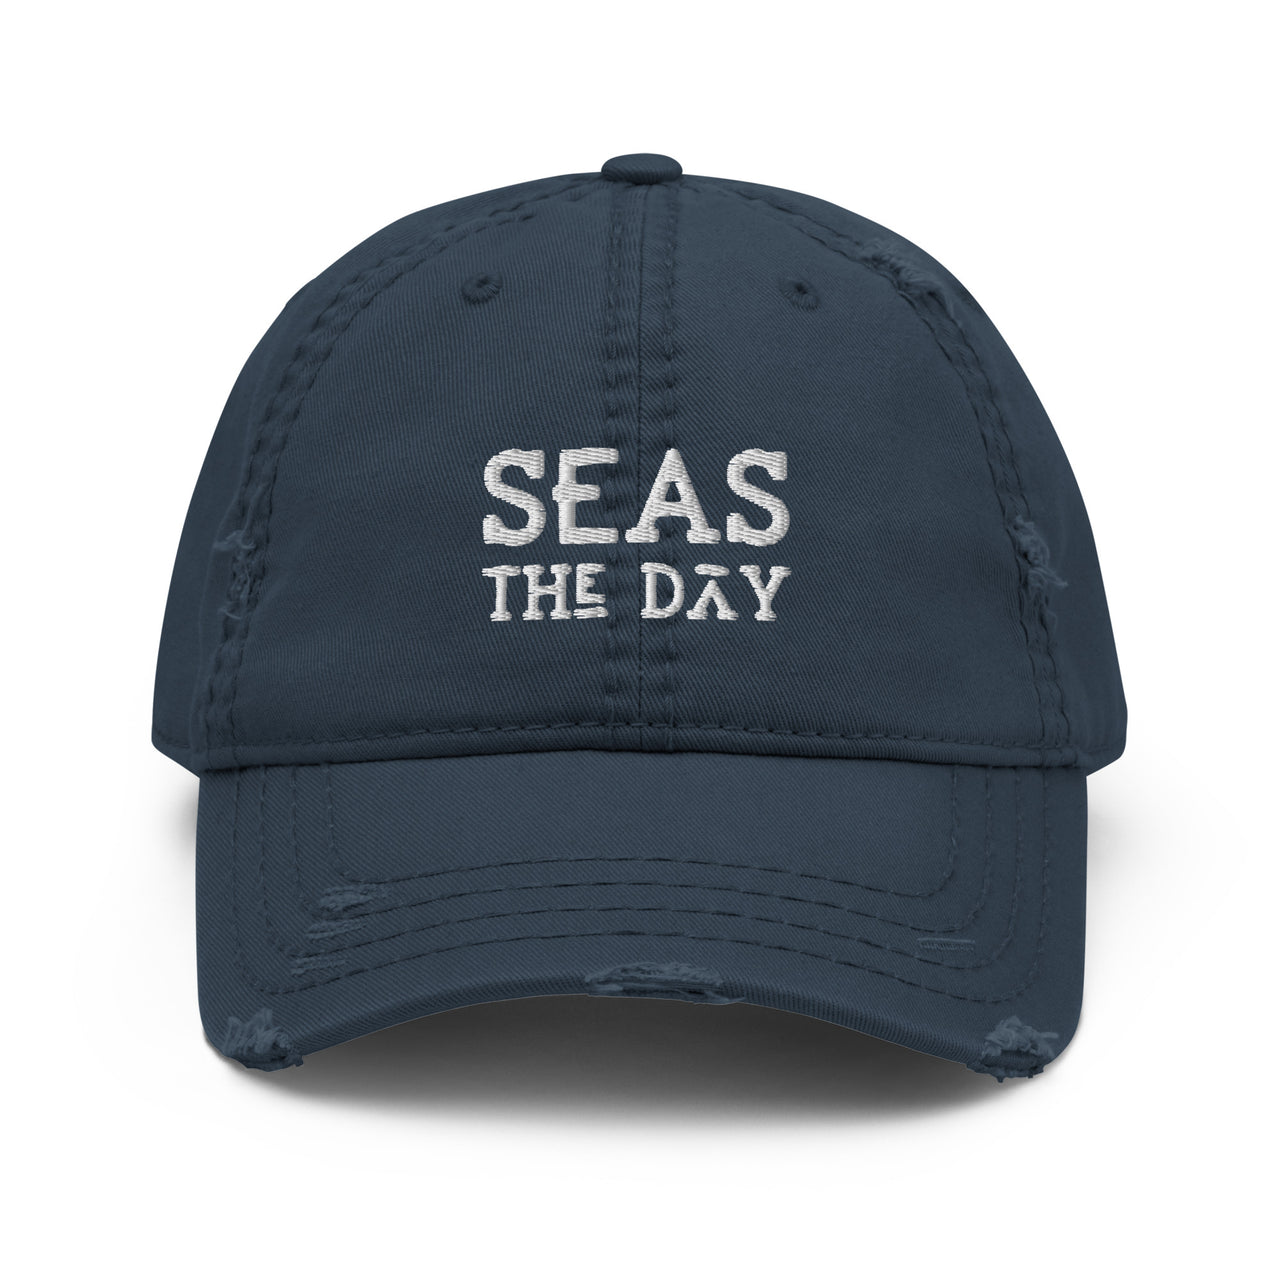 Seas The Day Distressed Hat, Baseball Cap, Navy